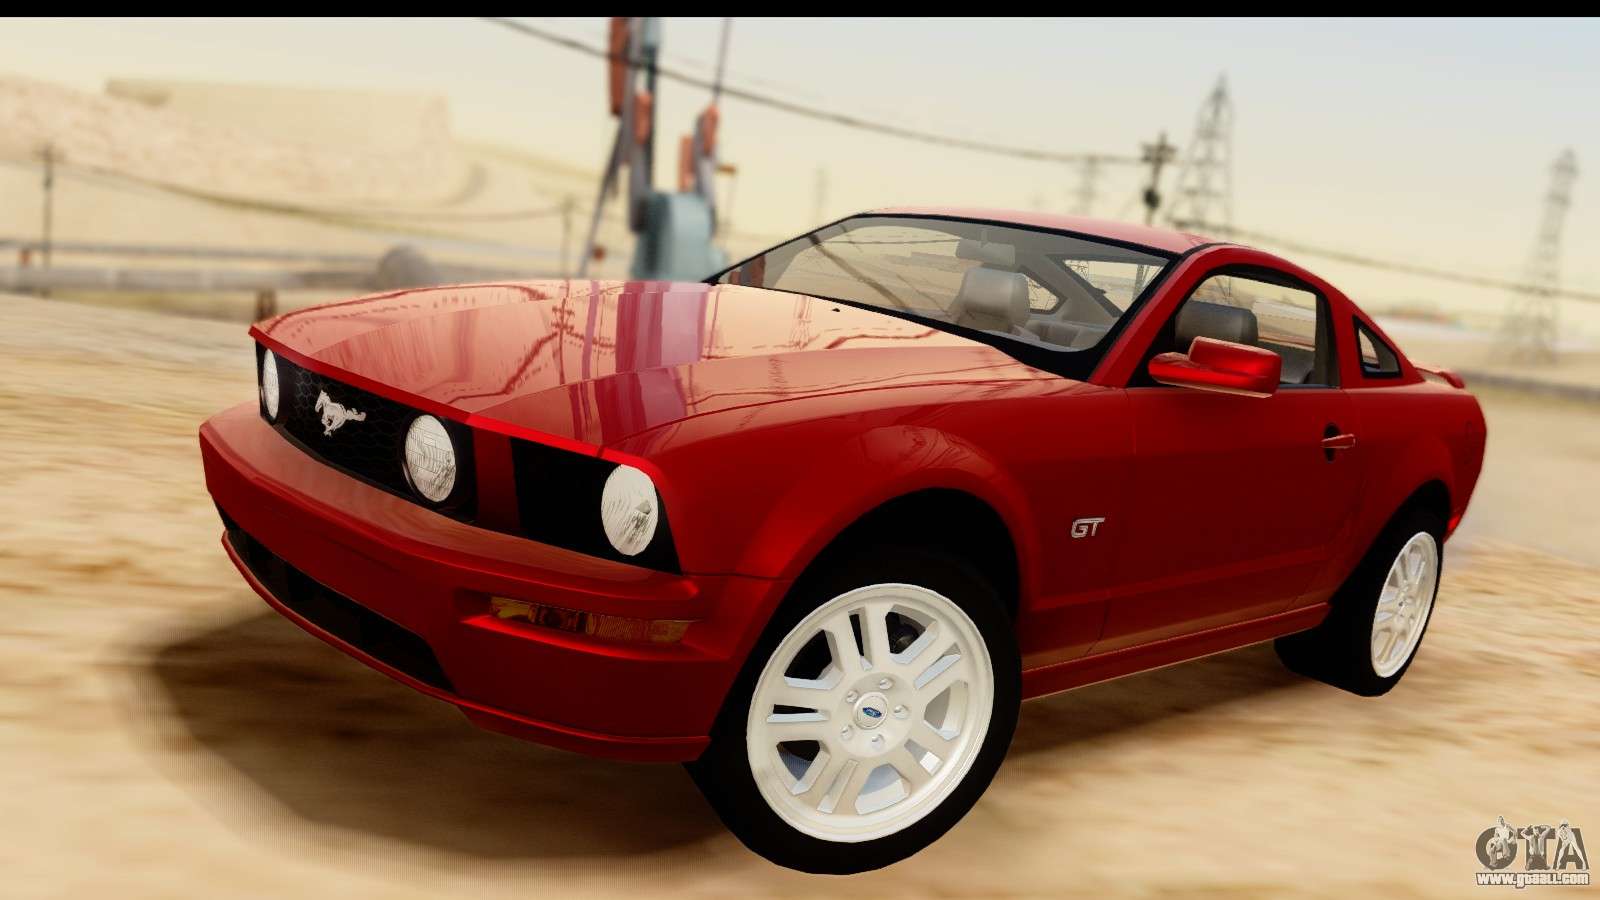 Ford Mustang для GTA San Andreas - libertycity.ru